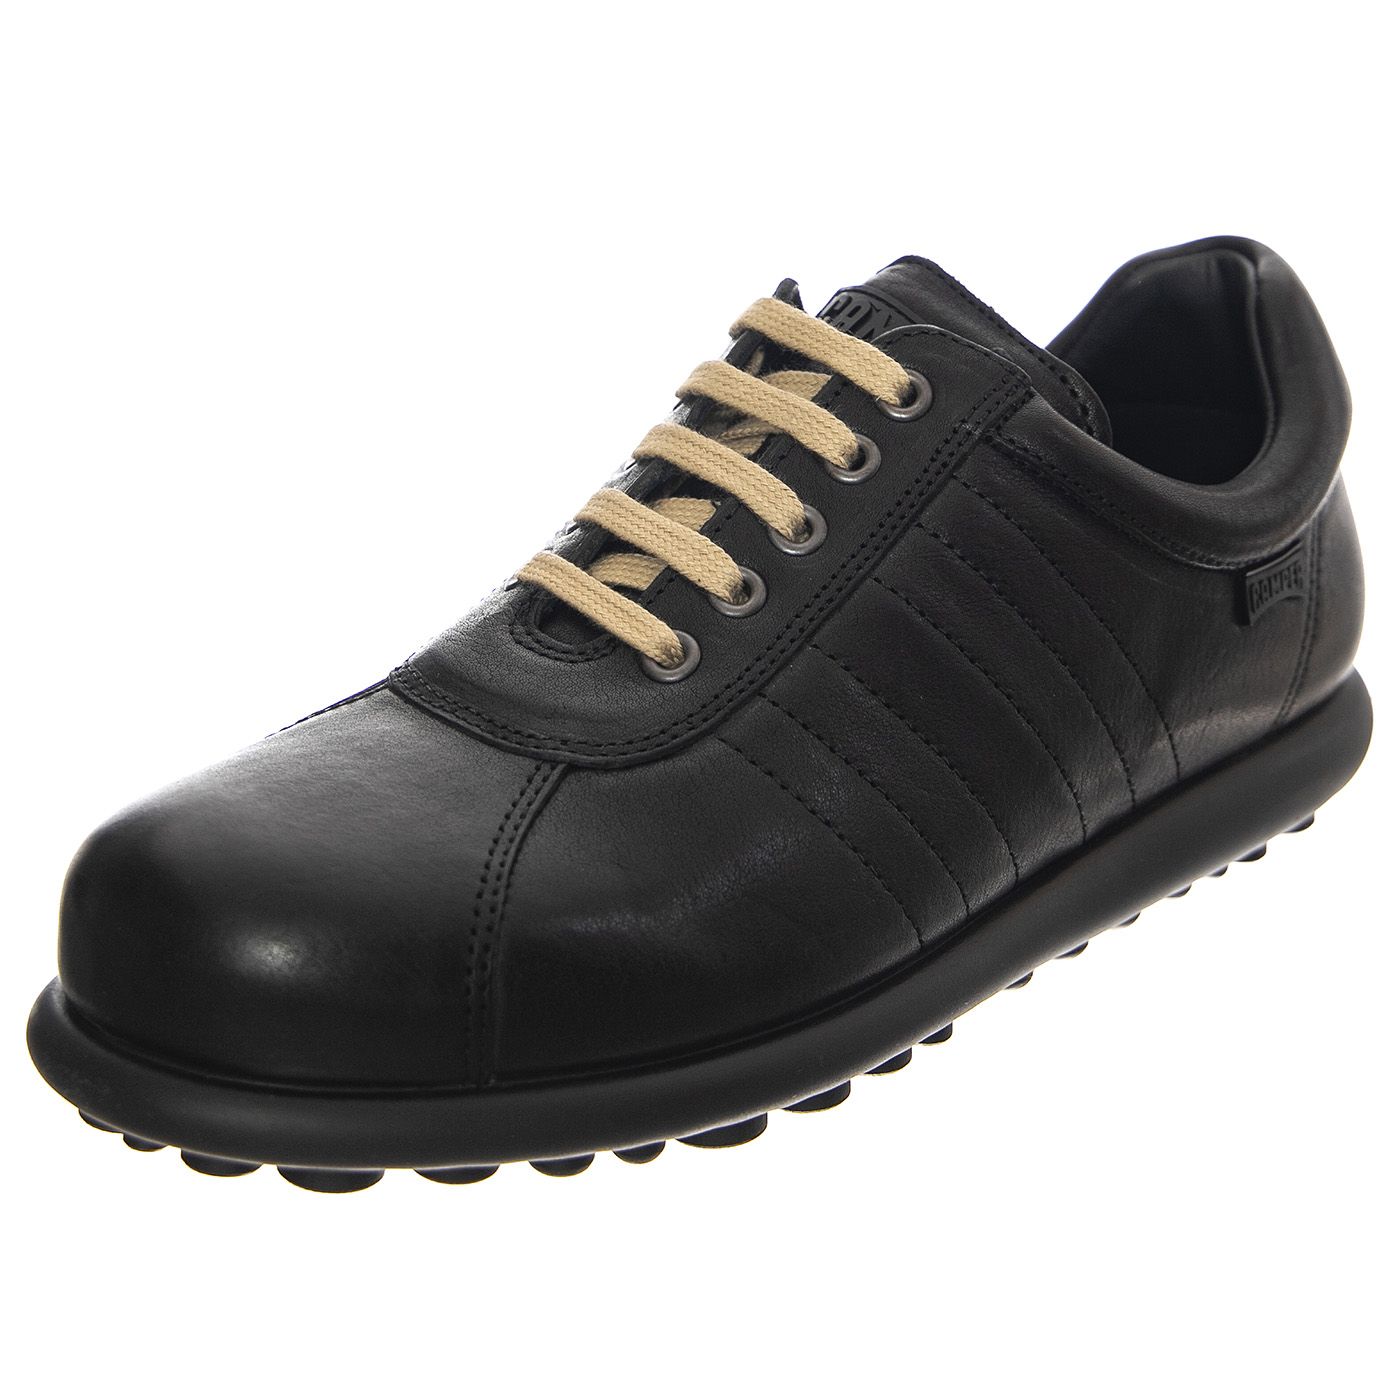 Soweto Negro/Ariel Negro (LFT) Shoes - Scarpe Stringate Profilo Basso Uomo  Nere